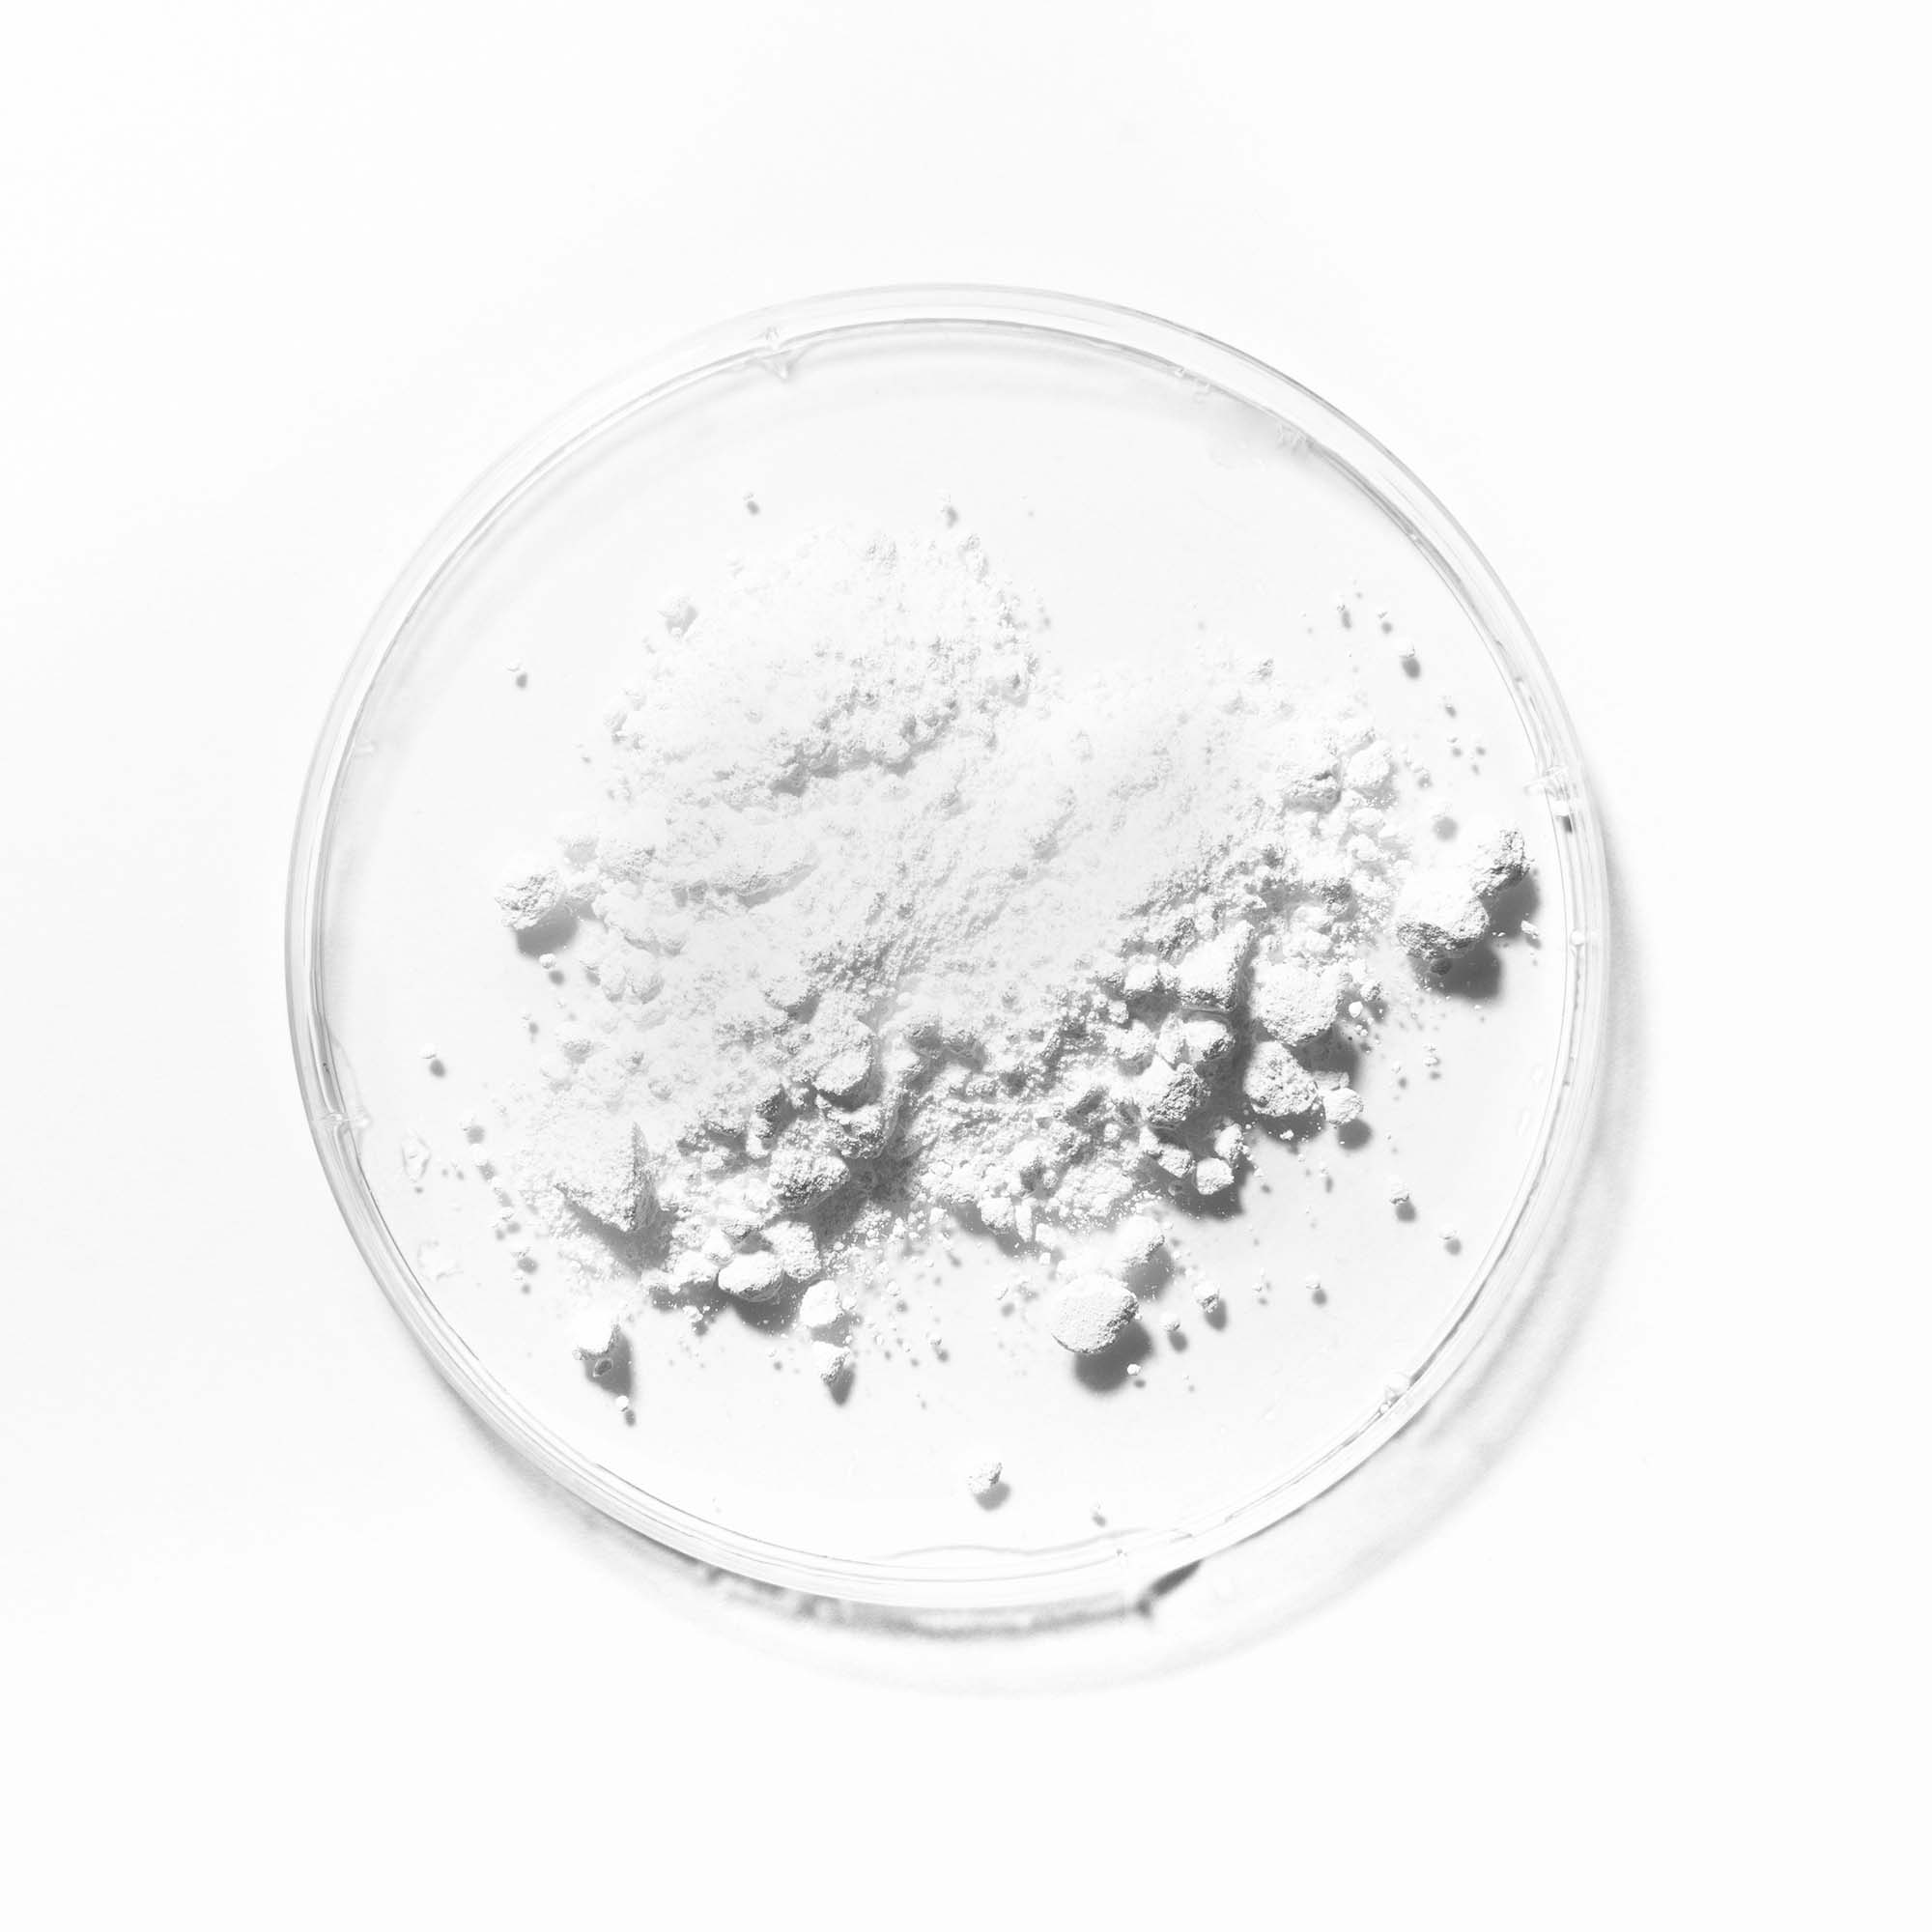 Non nano zinc oxide clean ingredients ATTITUDE